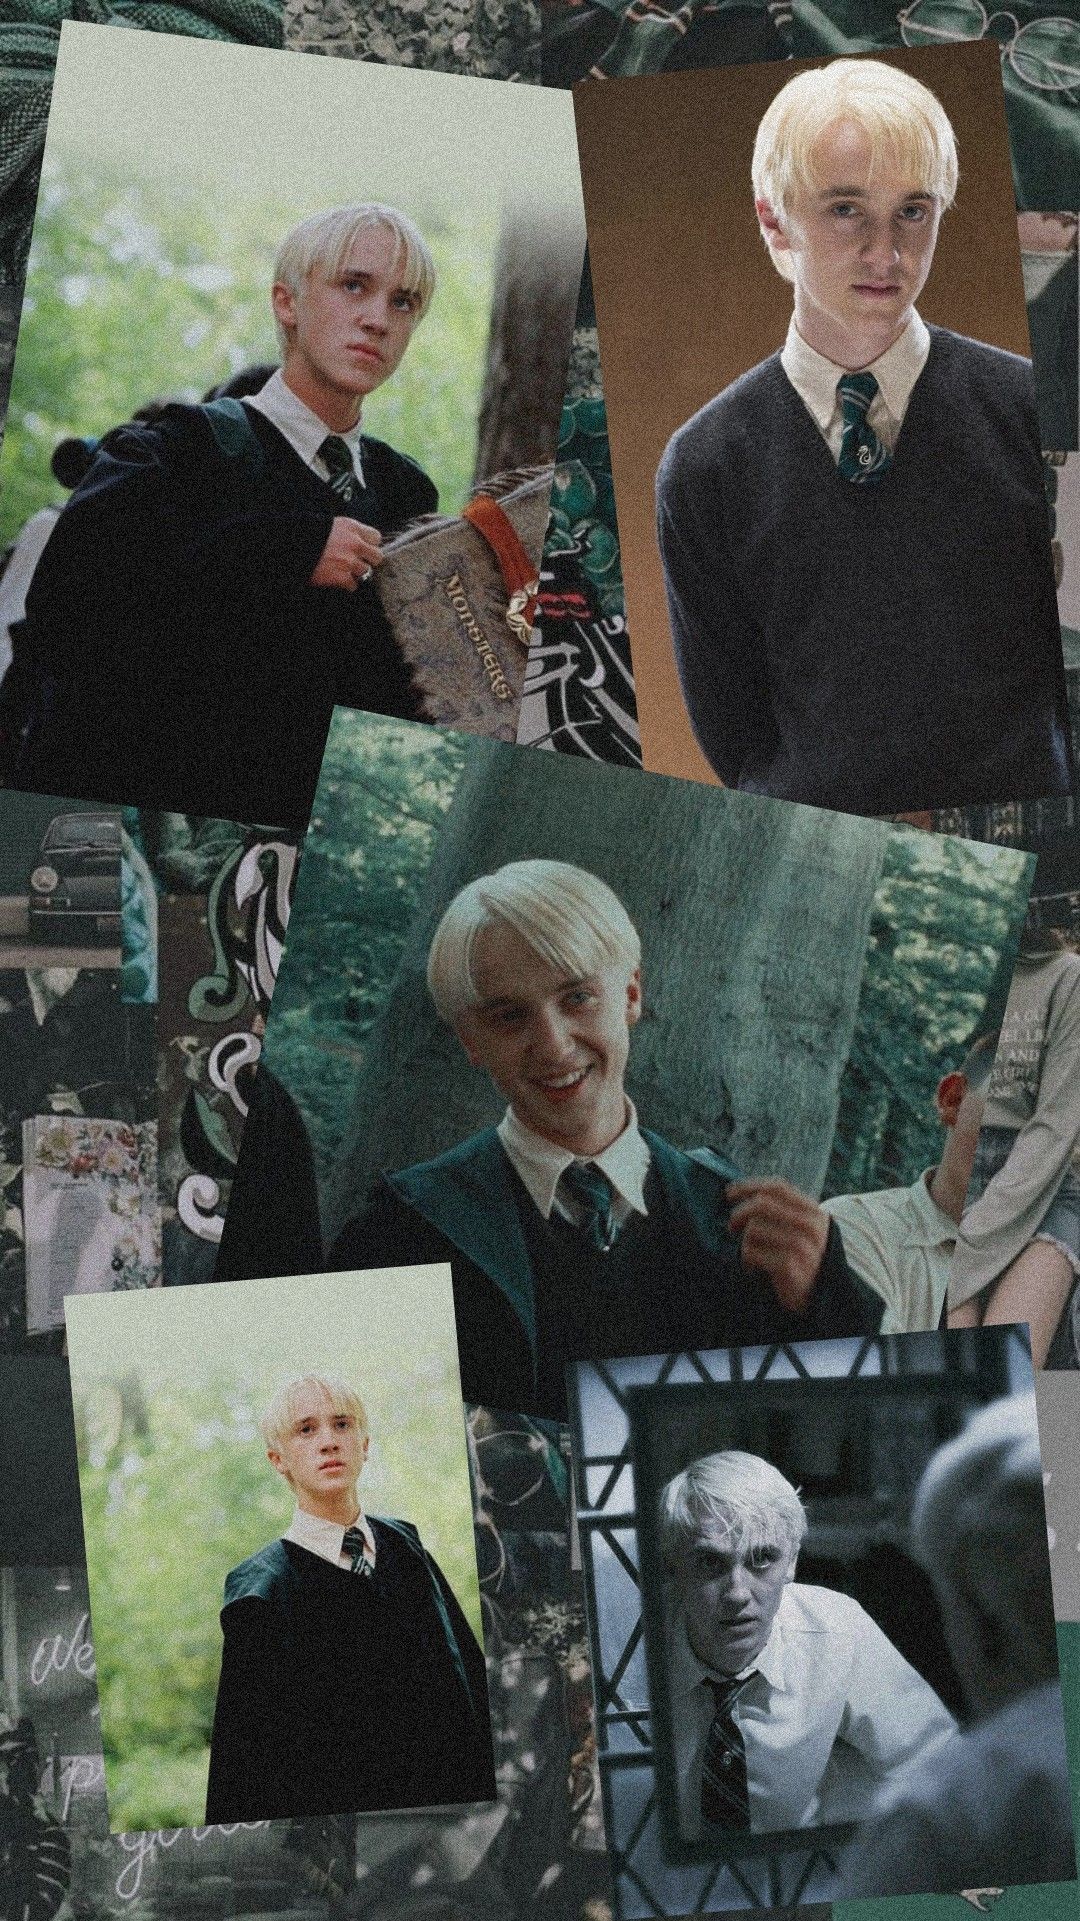 Hot Draco Malfoy Pics Wallpapers